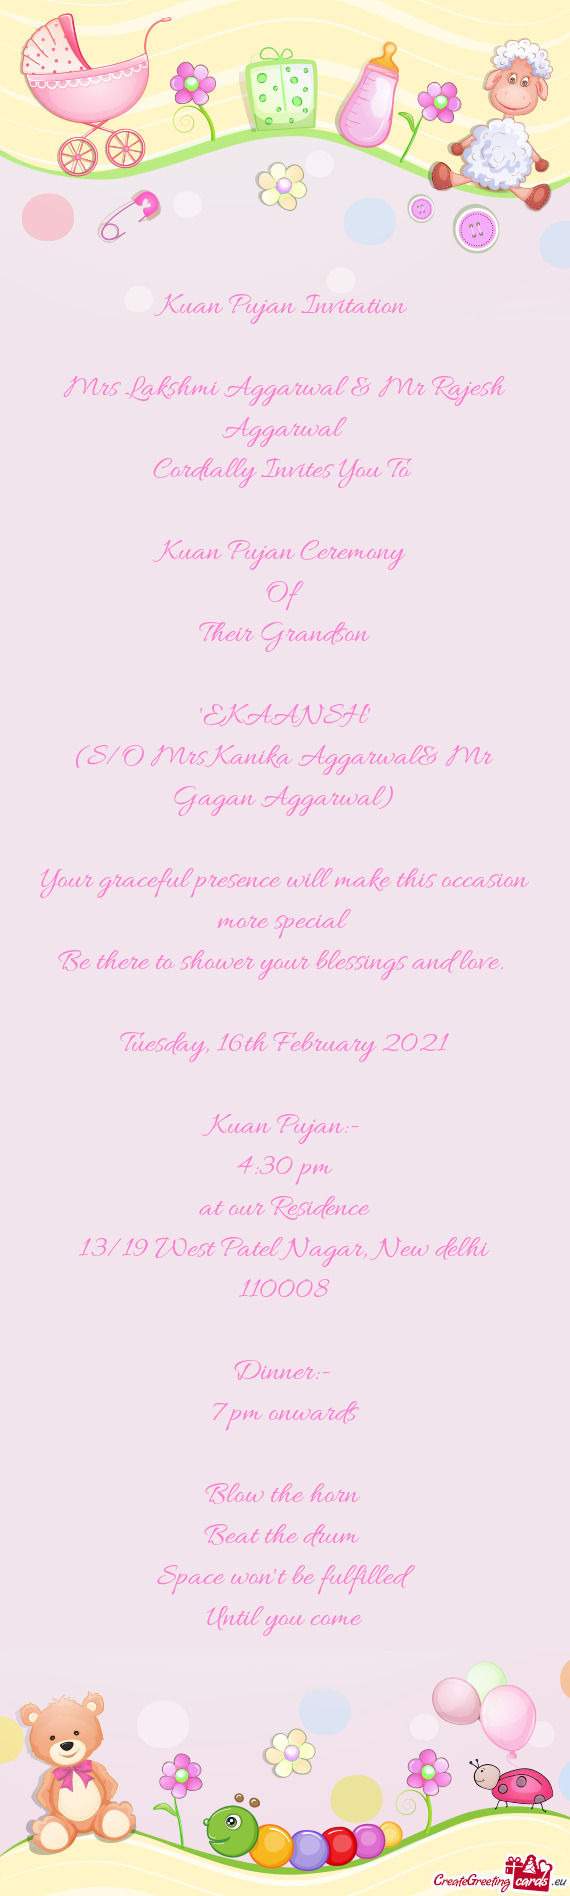 Tuesday, 16th February 2021